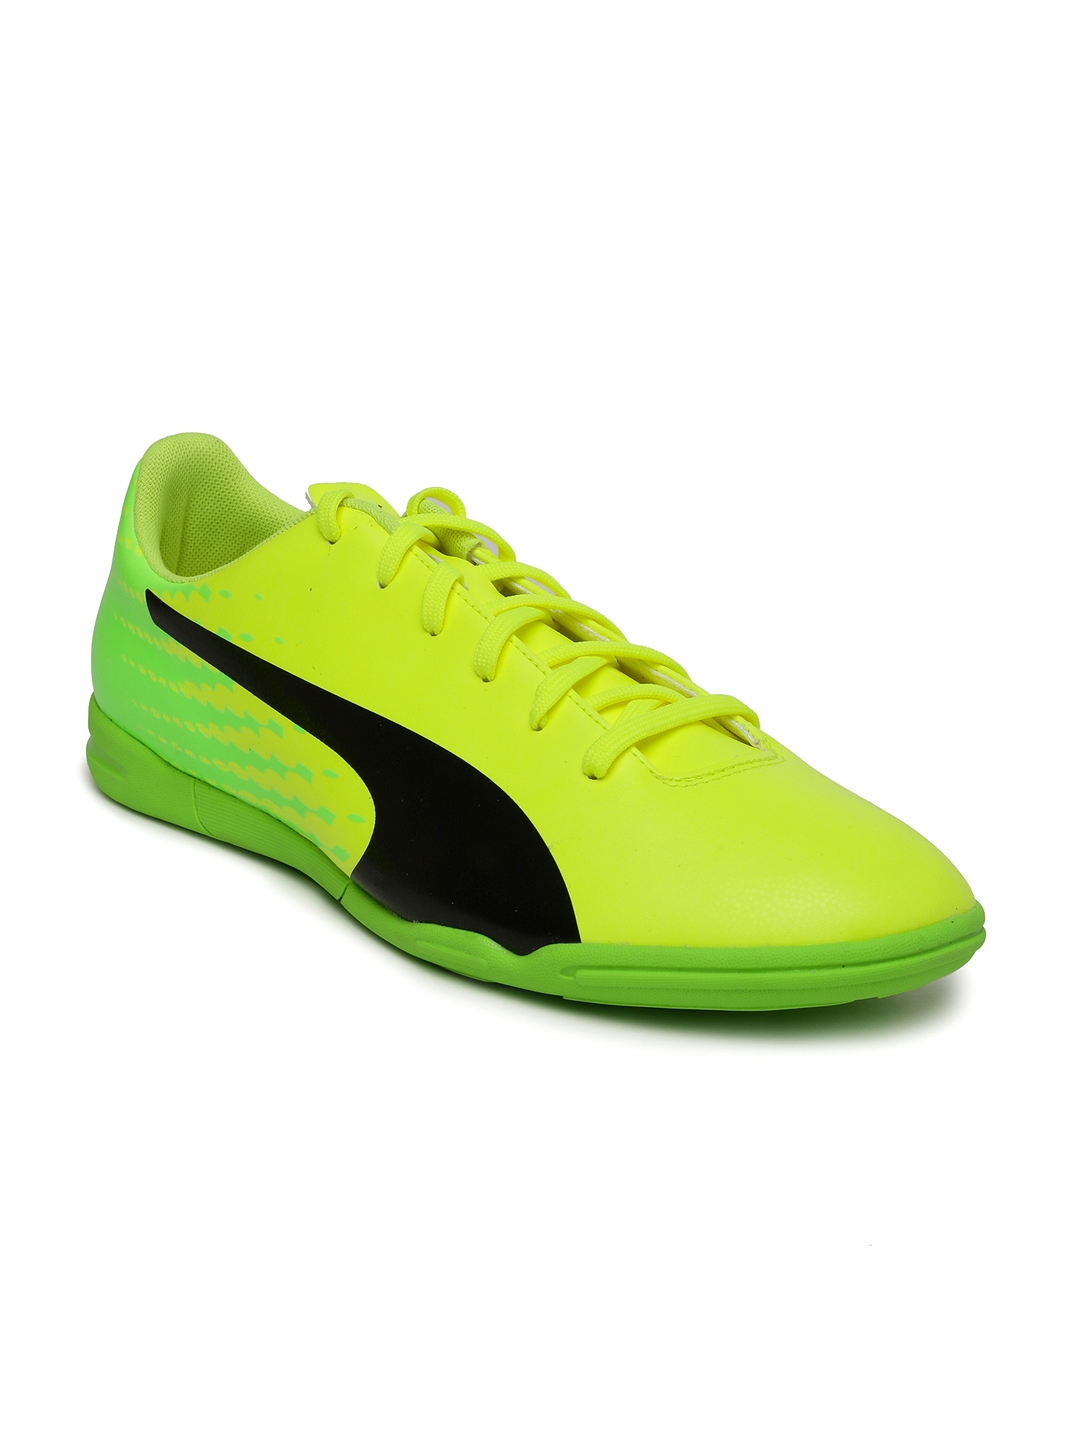 puma fluorescent shoes